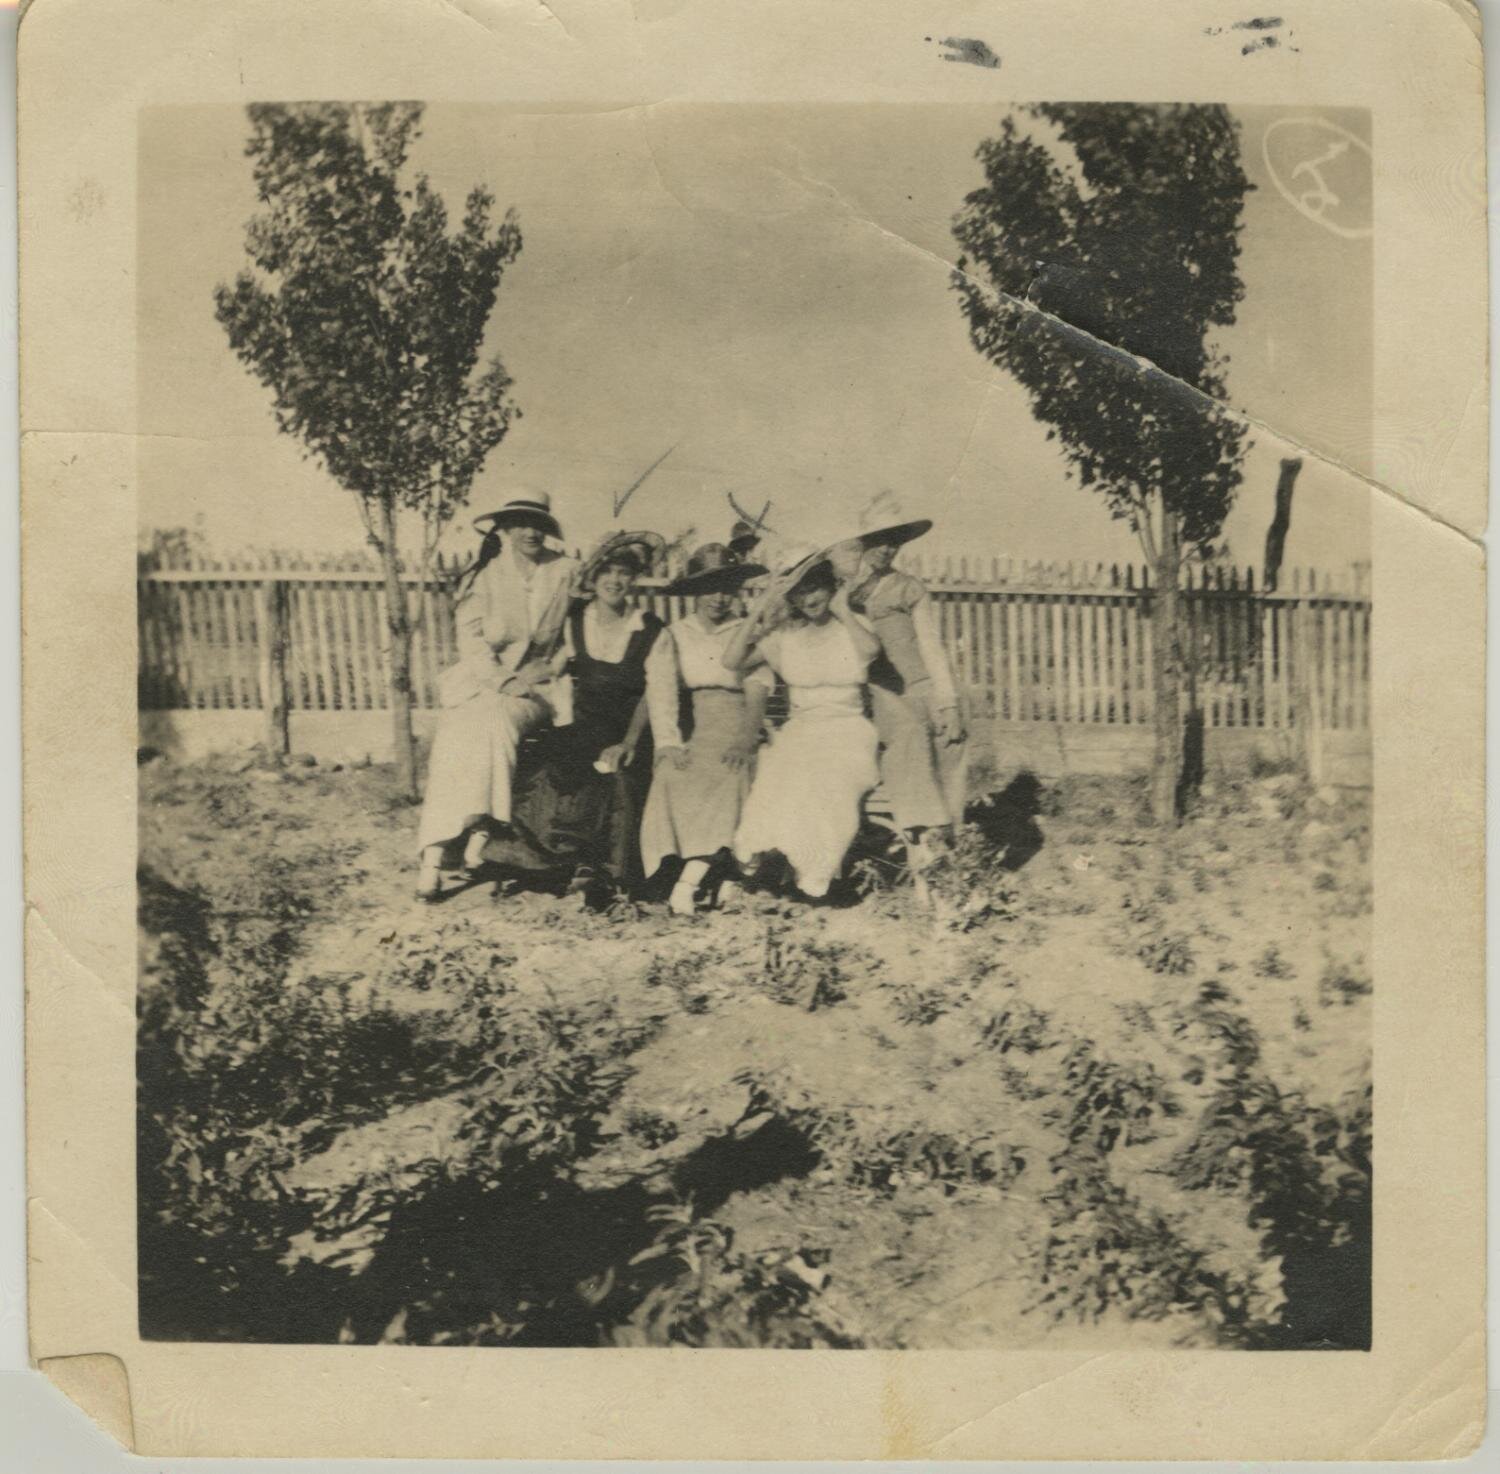  [Photograph of Women in Garden], photograph, 1914; (https://texashistory.unt.edu/ark:/67531/metapth596816/m1/1/: accessed June 2, 2019), University of North Texas Libraries, The Portal to Texas History, https://texashistory.unt.edu; crediting Abilen